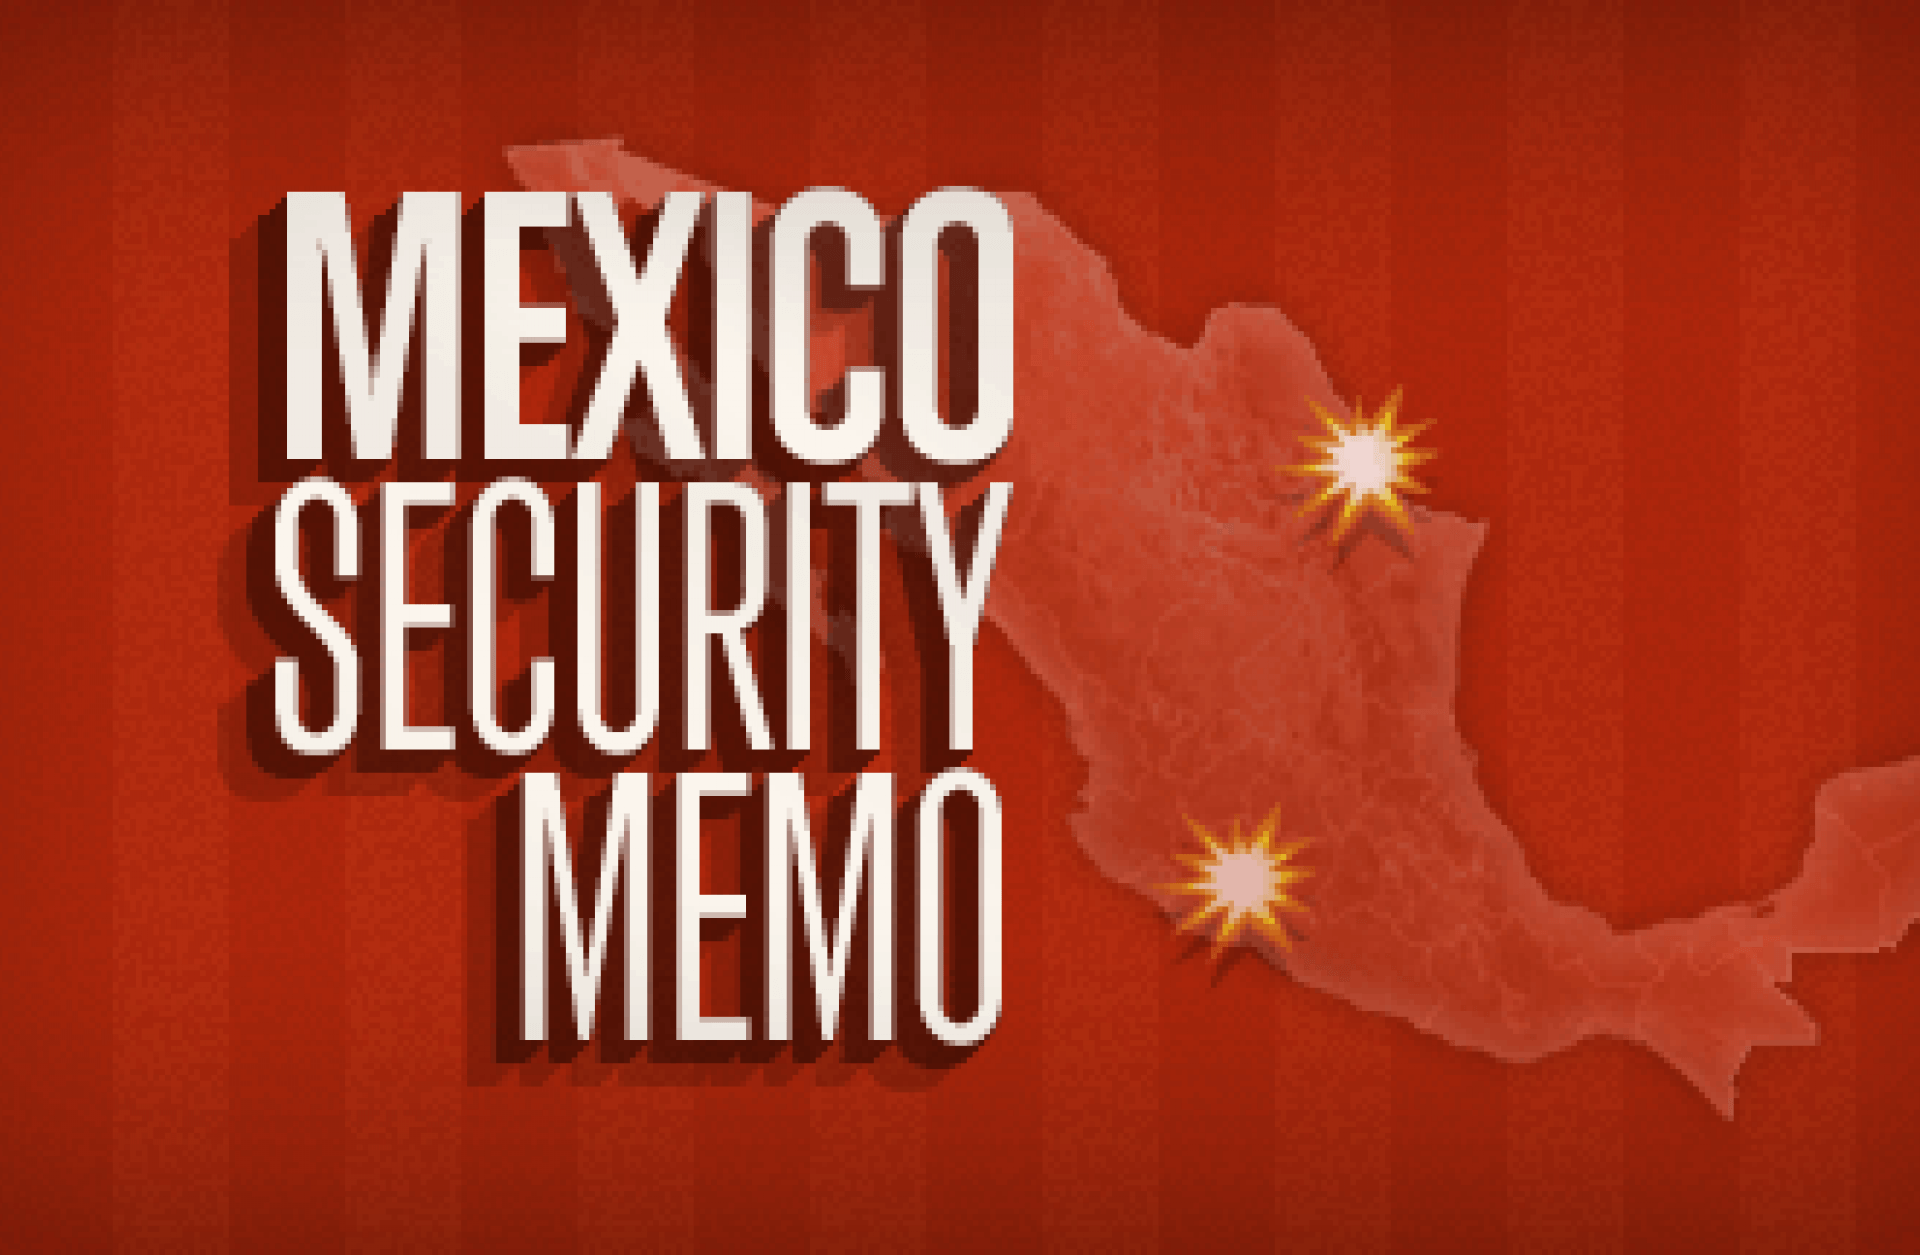 Mexico Security Memo